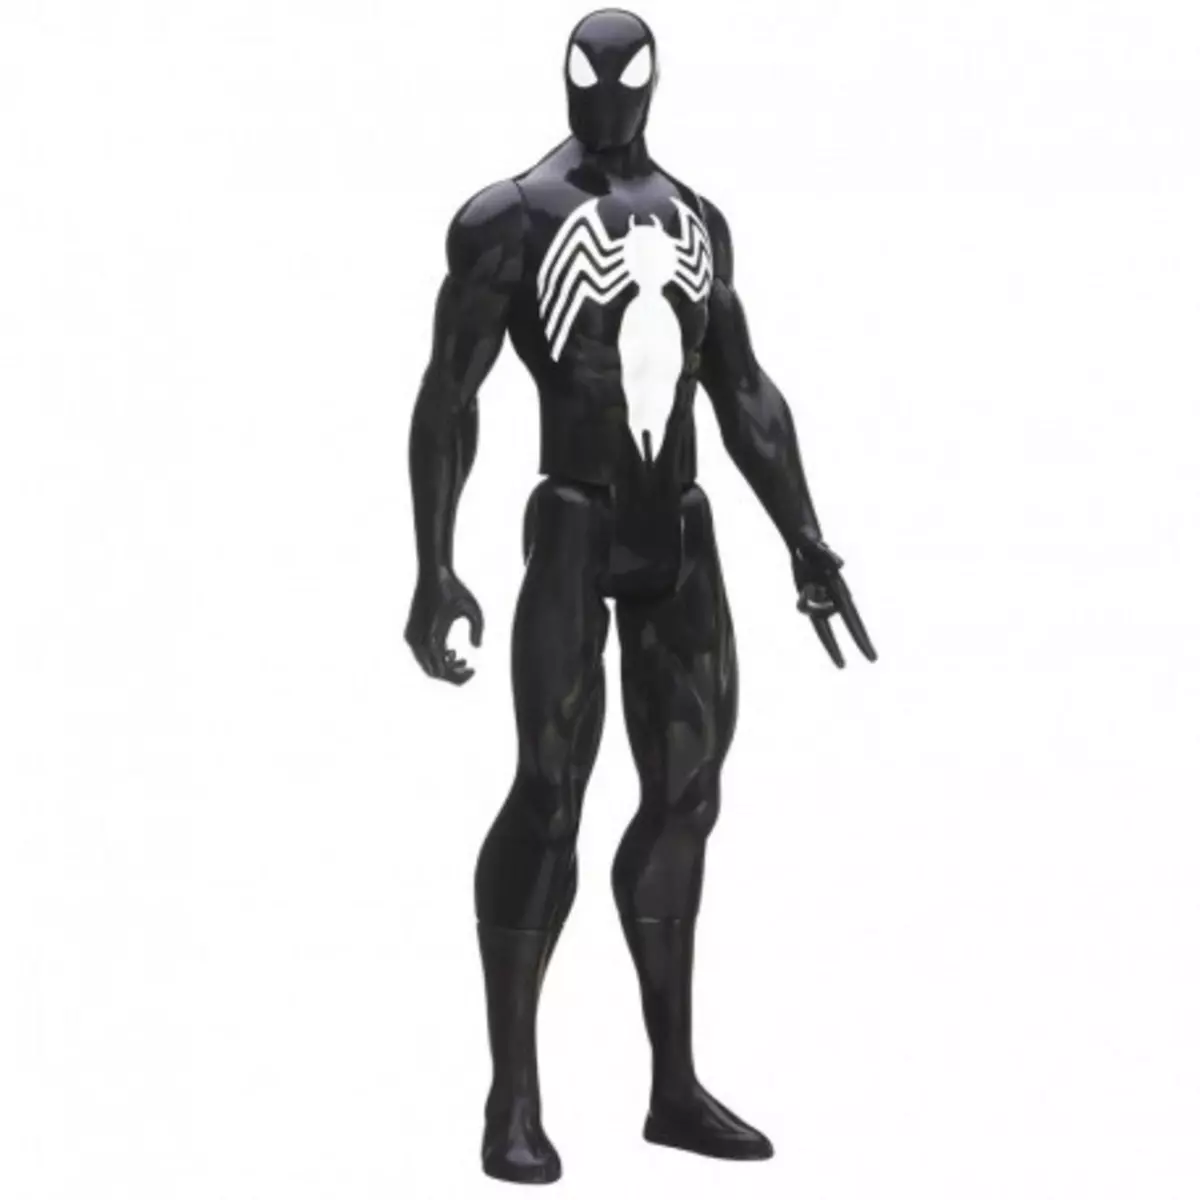 HASBRO Figurine Titan Ultimate Spider-Man - Black Suit 